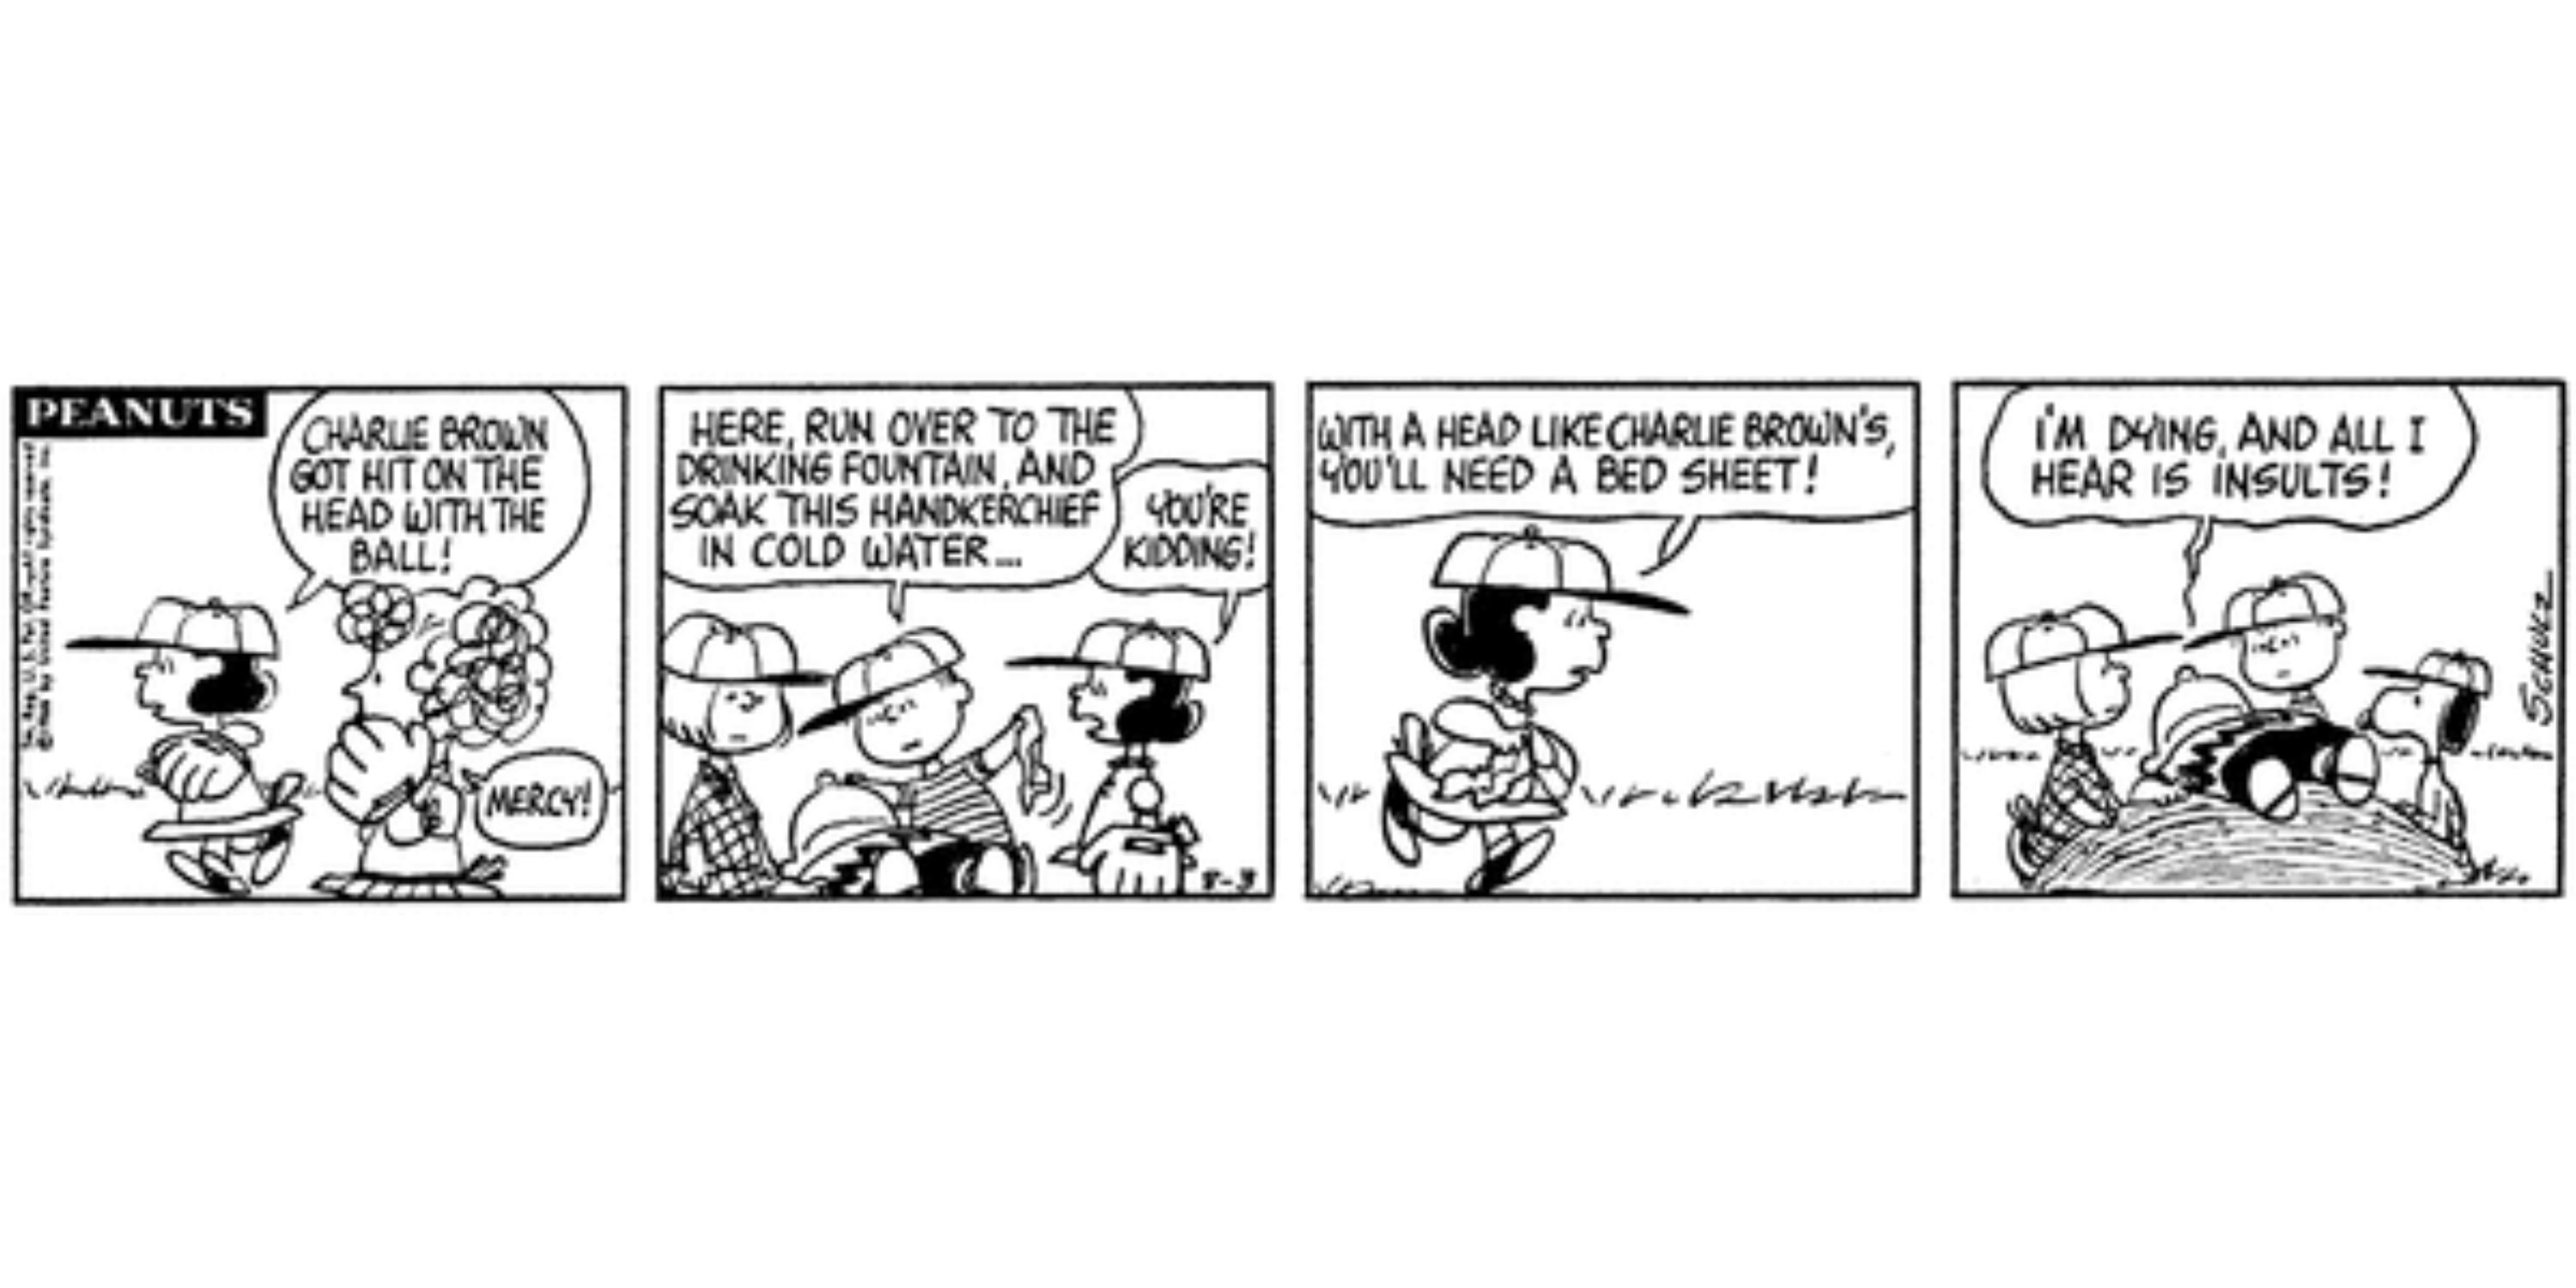 Charlie Brown injured playing baseball in Peanuts.